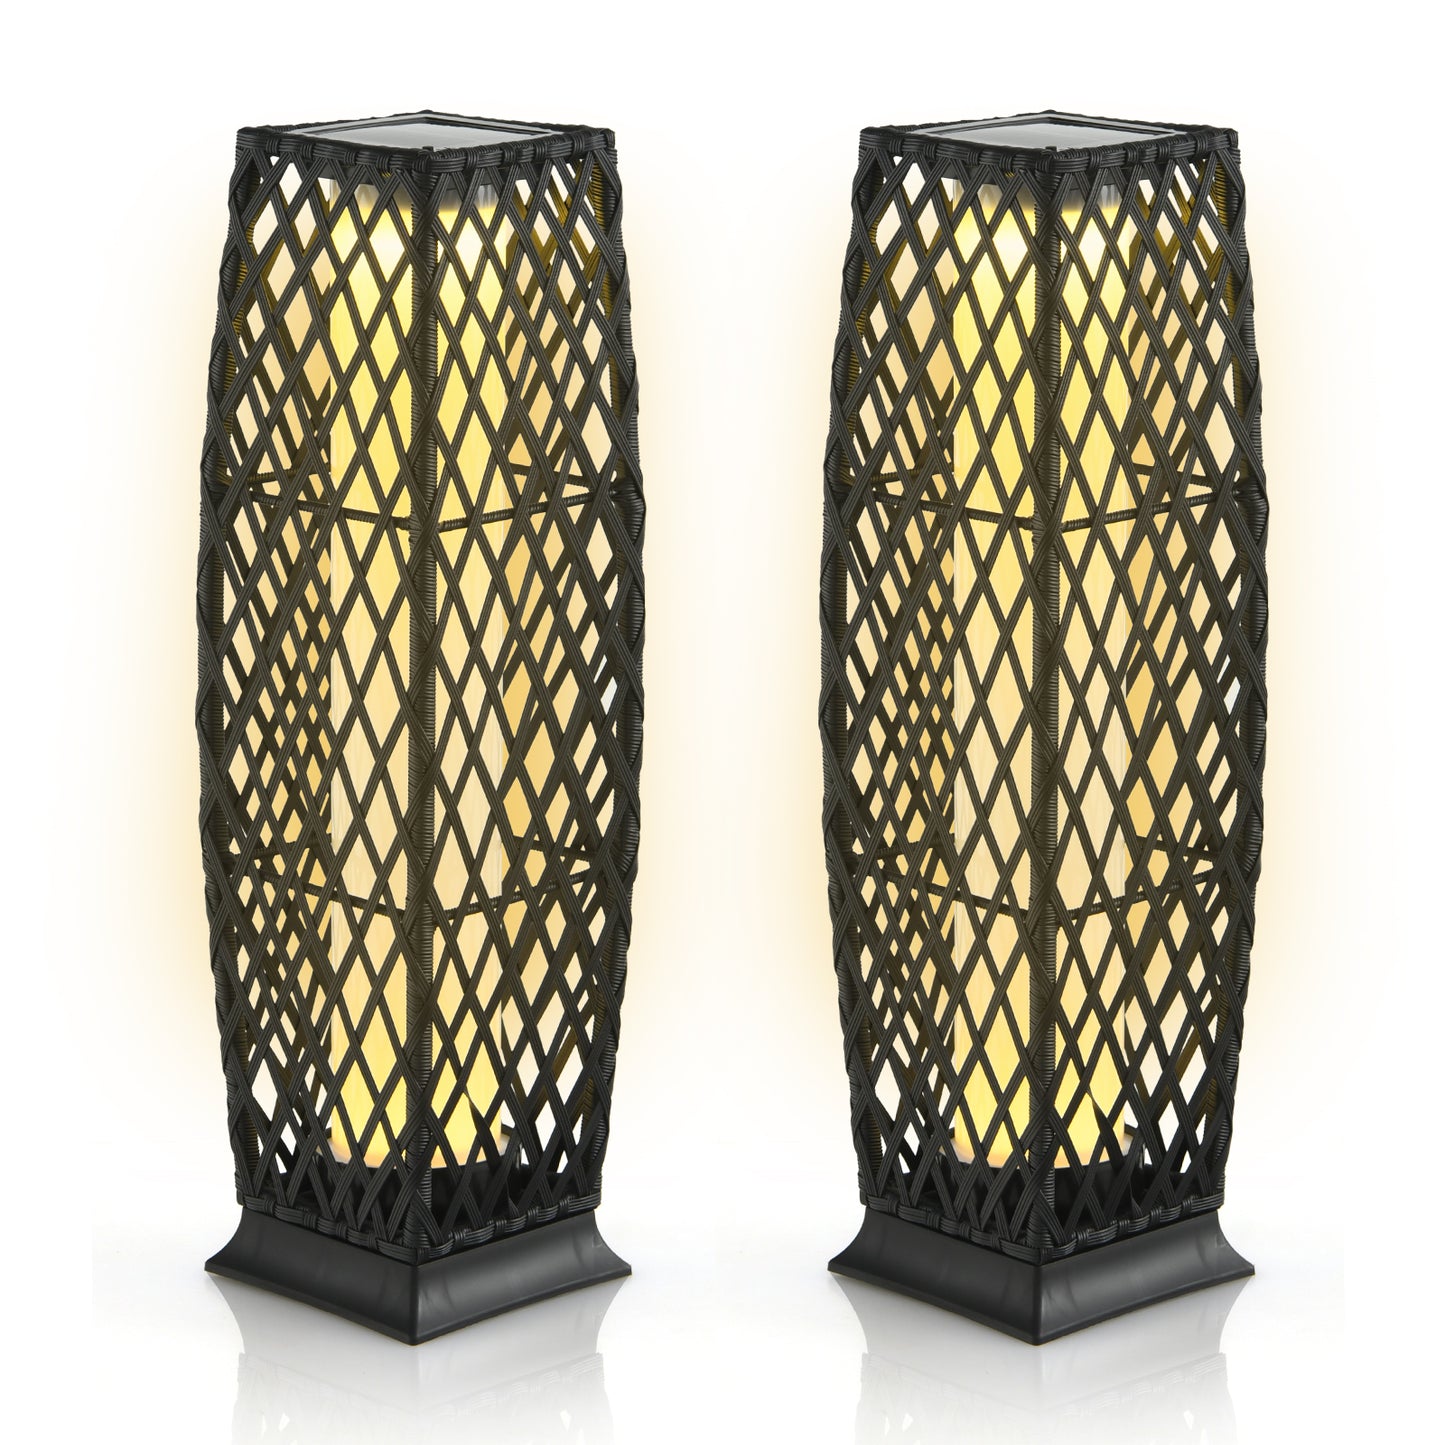 2 Pieces Solar-Powered Diamond Wicker Floor Lamps with Auto LED Light-Black